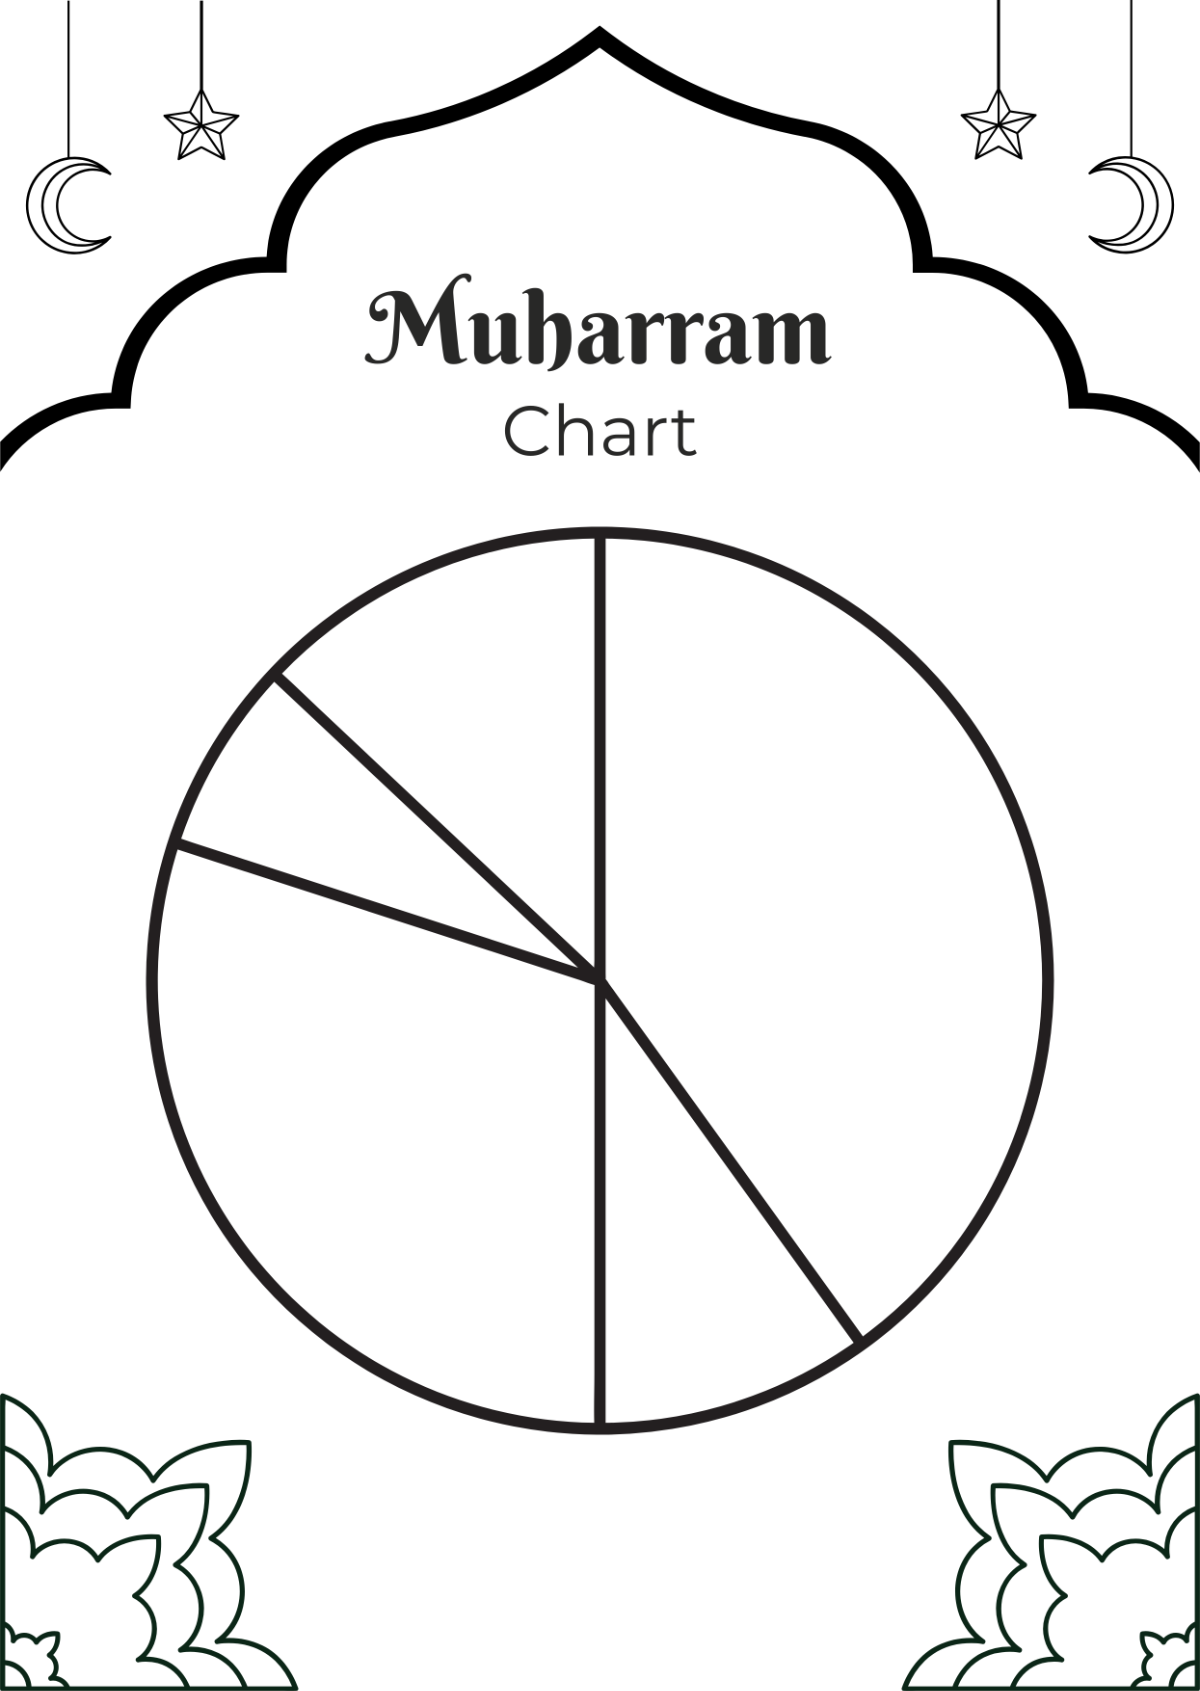 Muharram Chart Drawing